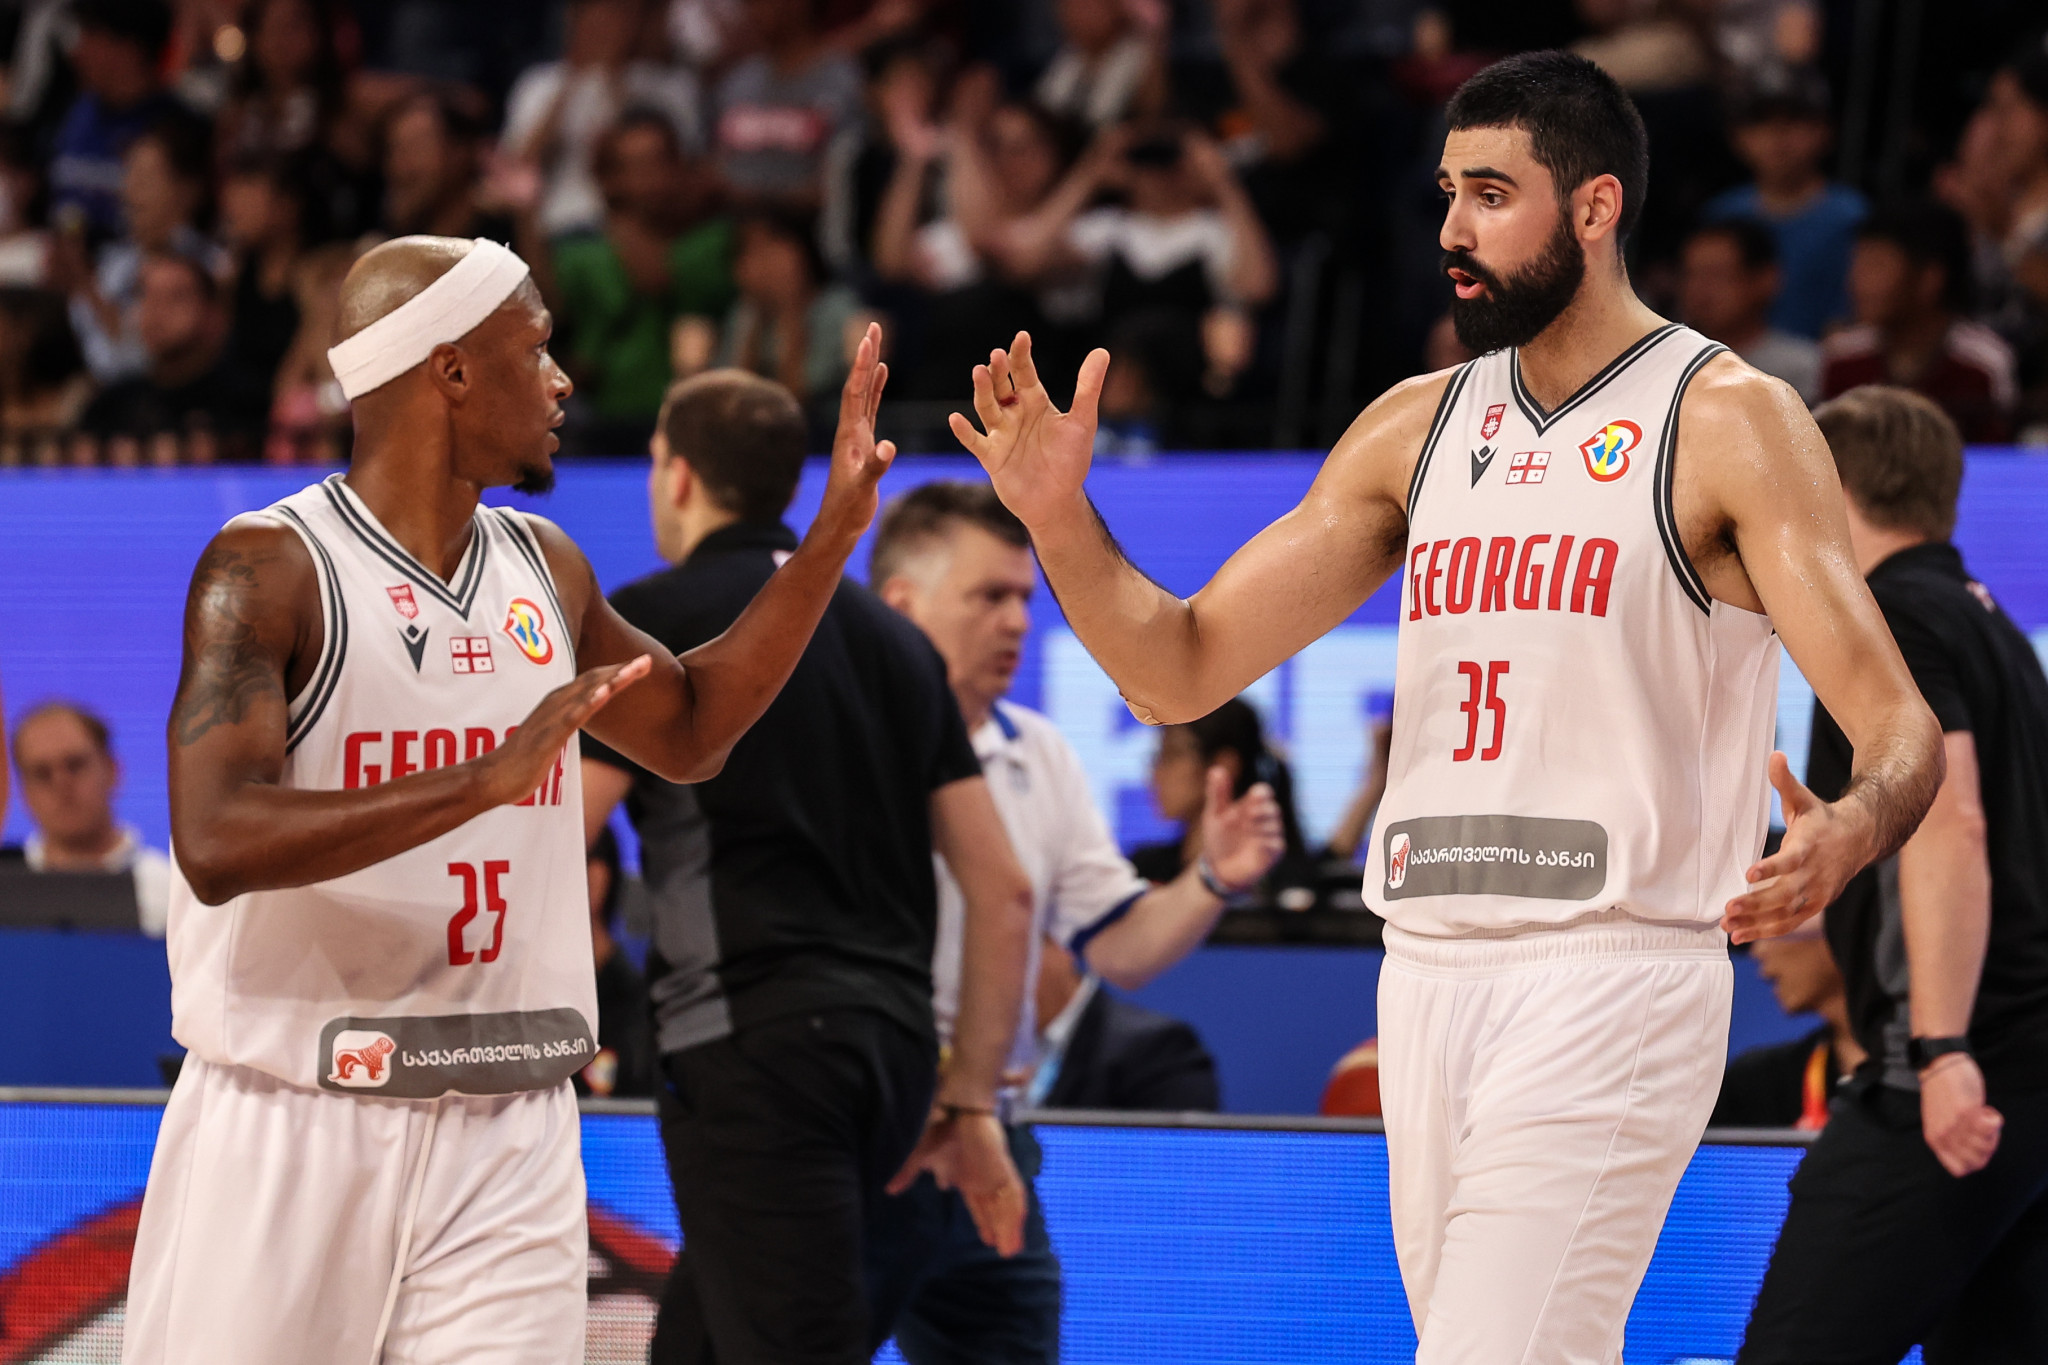 Georgia advance at FIBA World Cup to keep dream maiden tournament alive